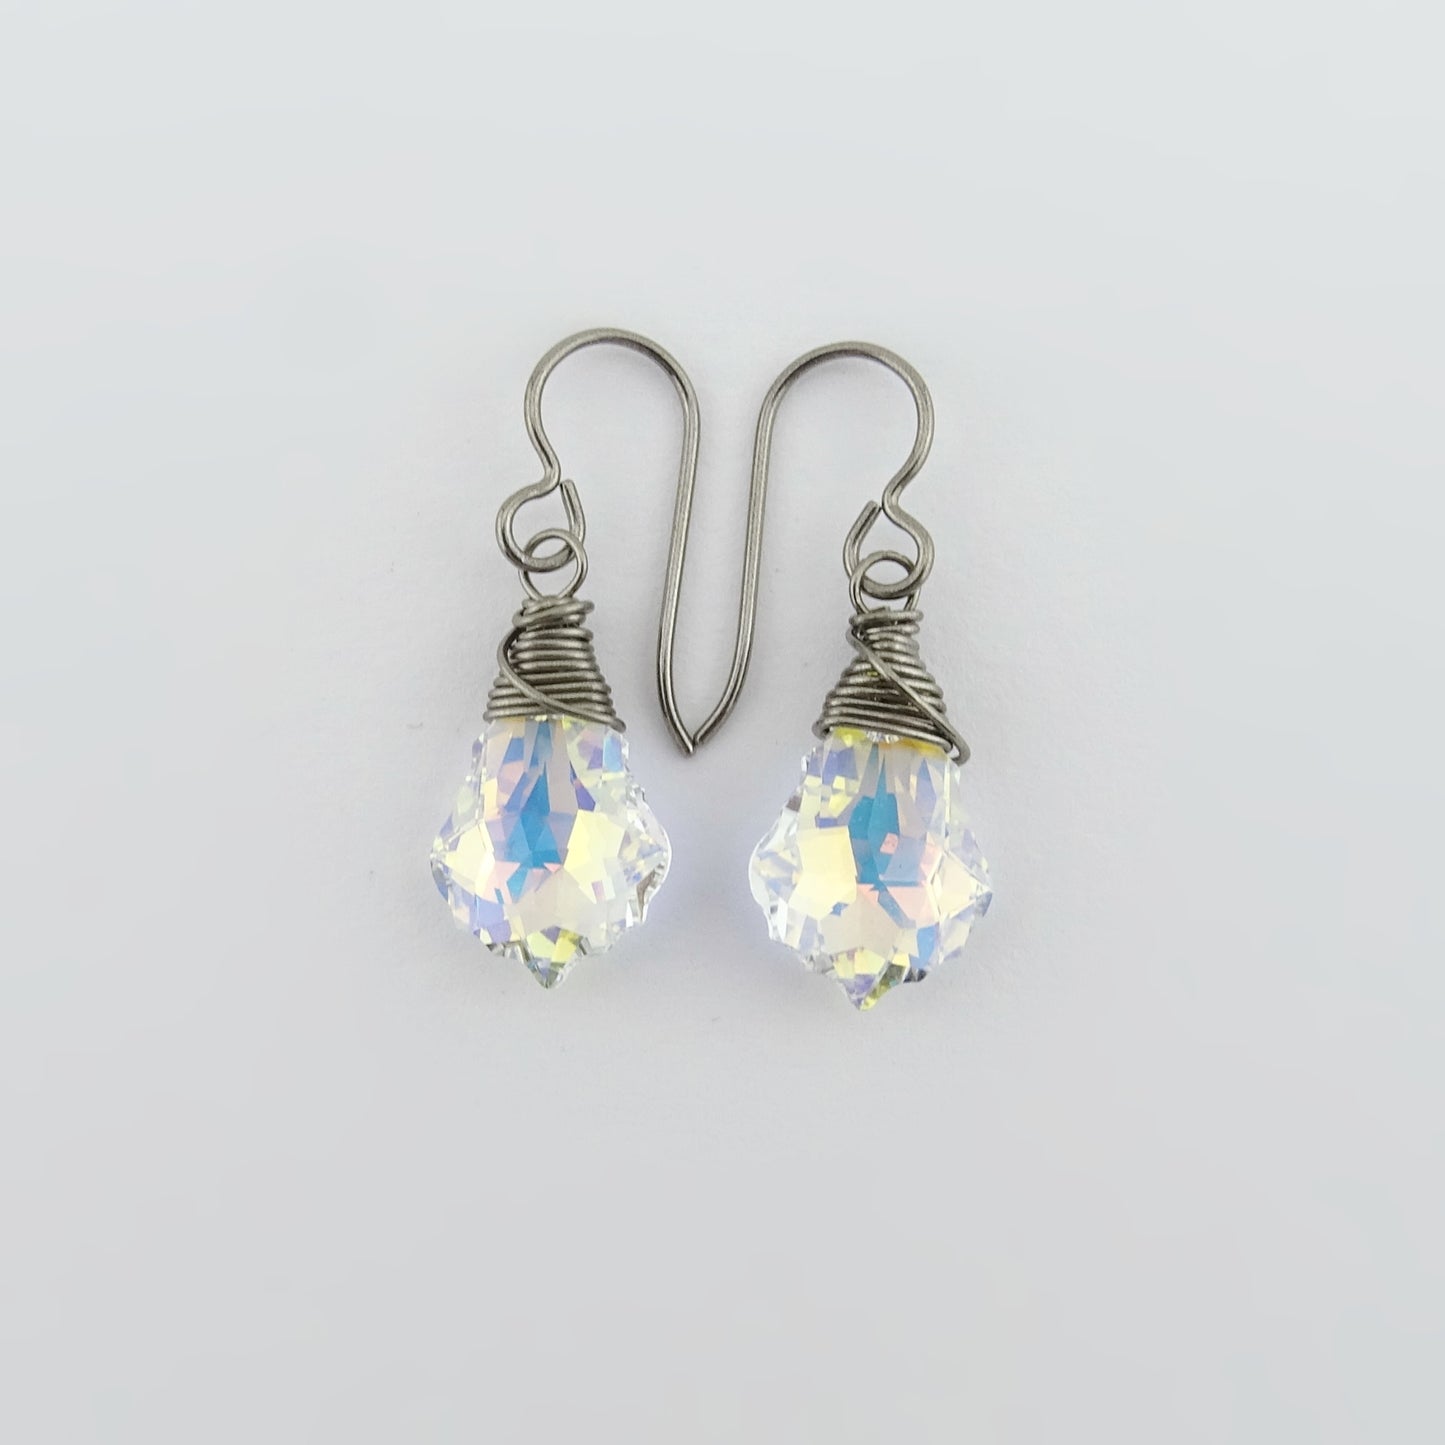 Titanium Earrings with Baroque Aurora Borealis Crystals